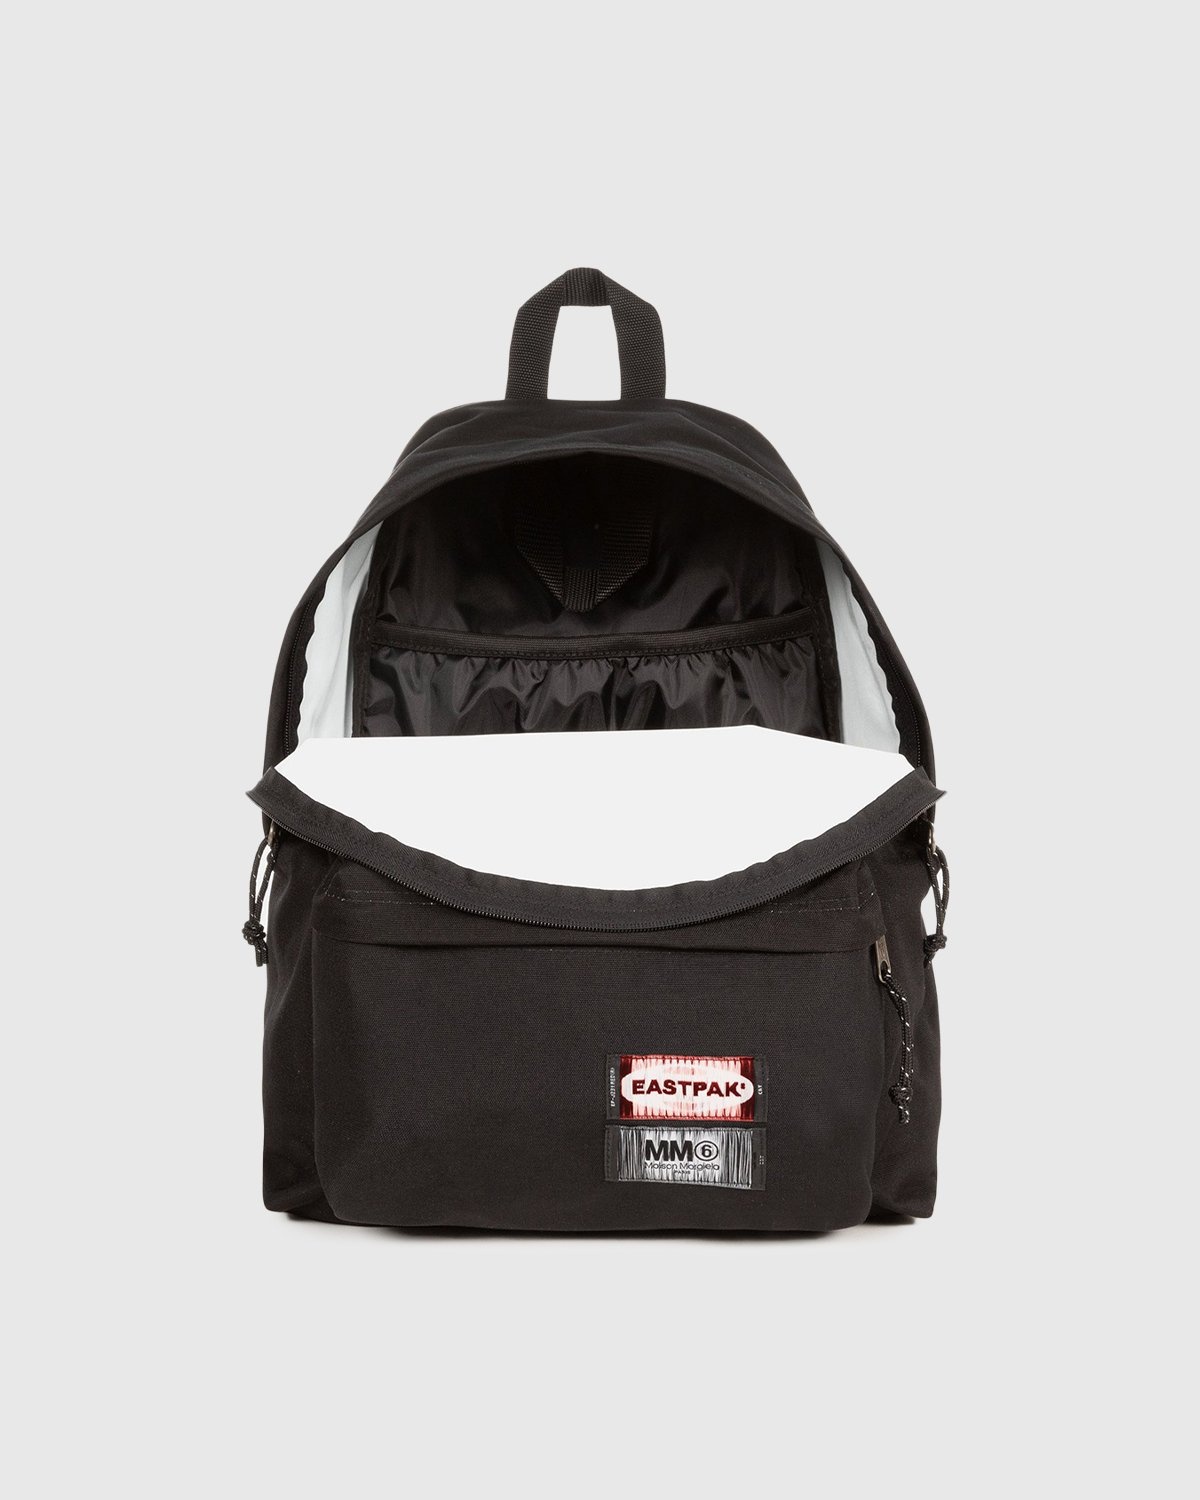 MM6 Maison Margiela x Eastpak – Padded Backpack Black - Bags - Black - Image 3